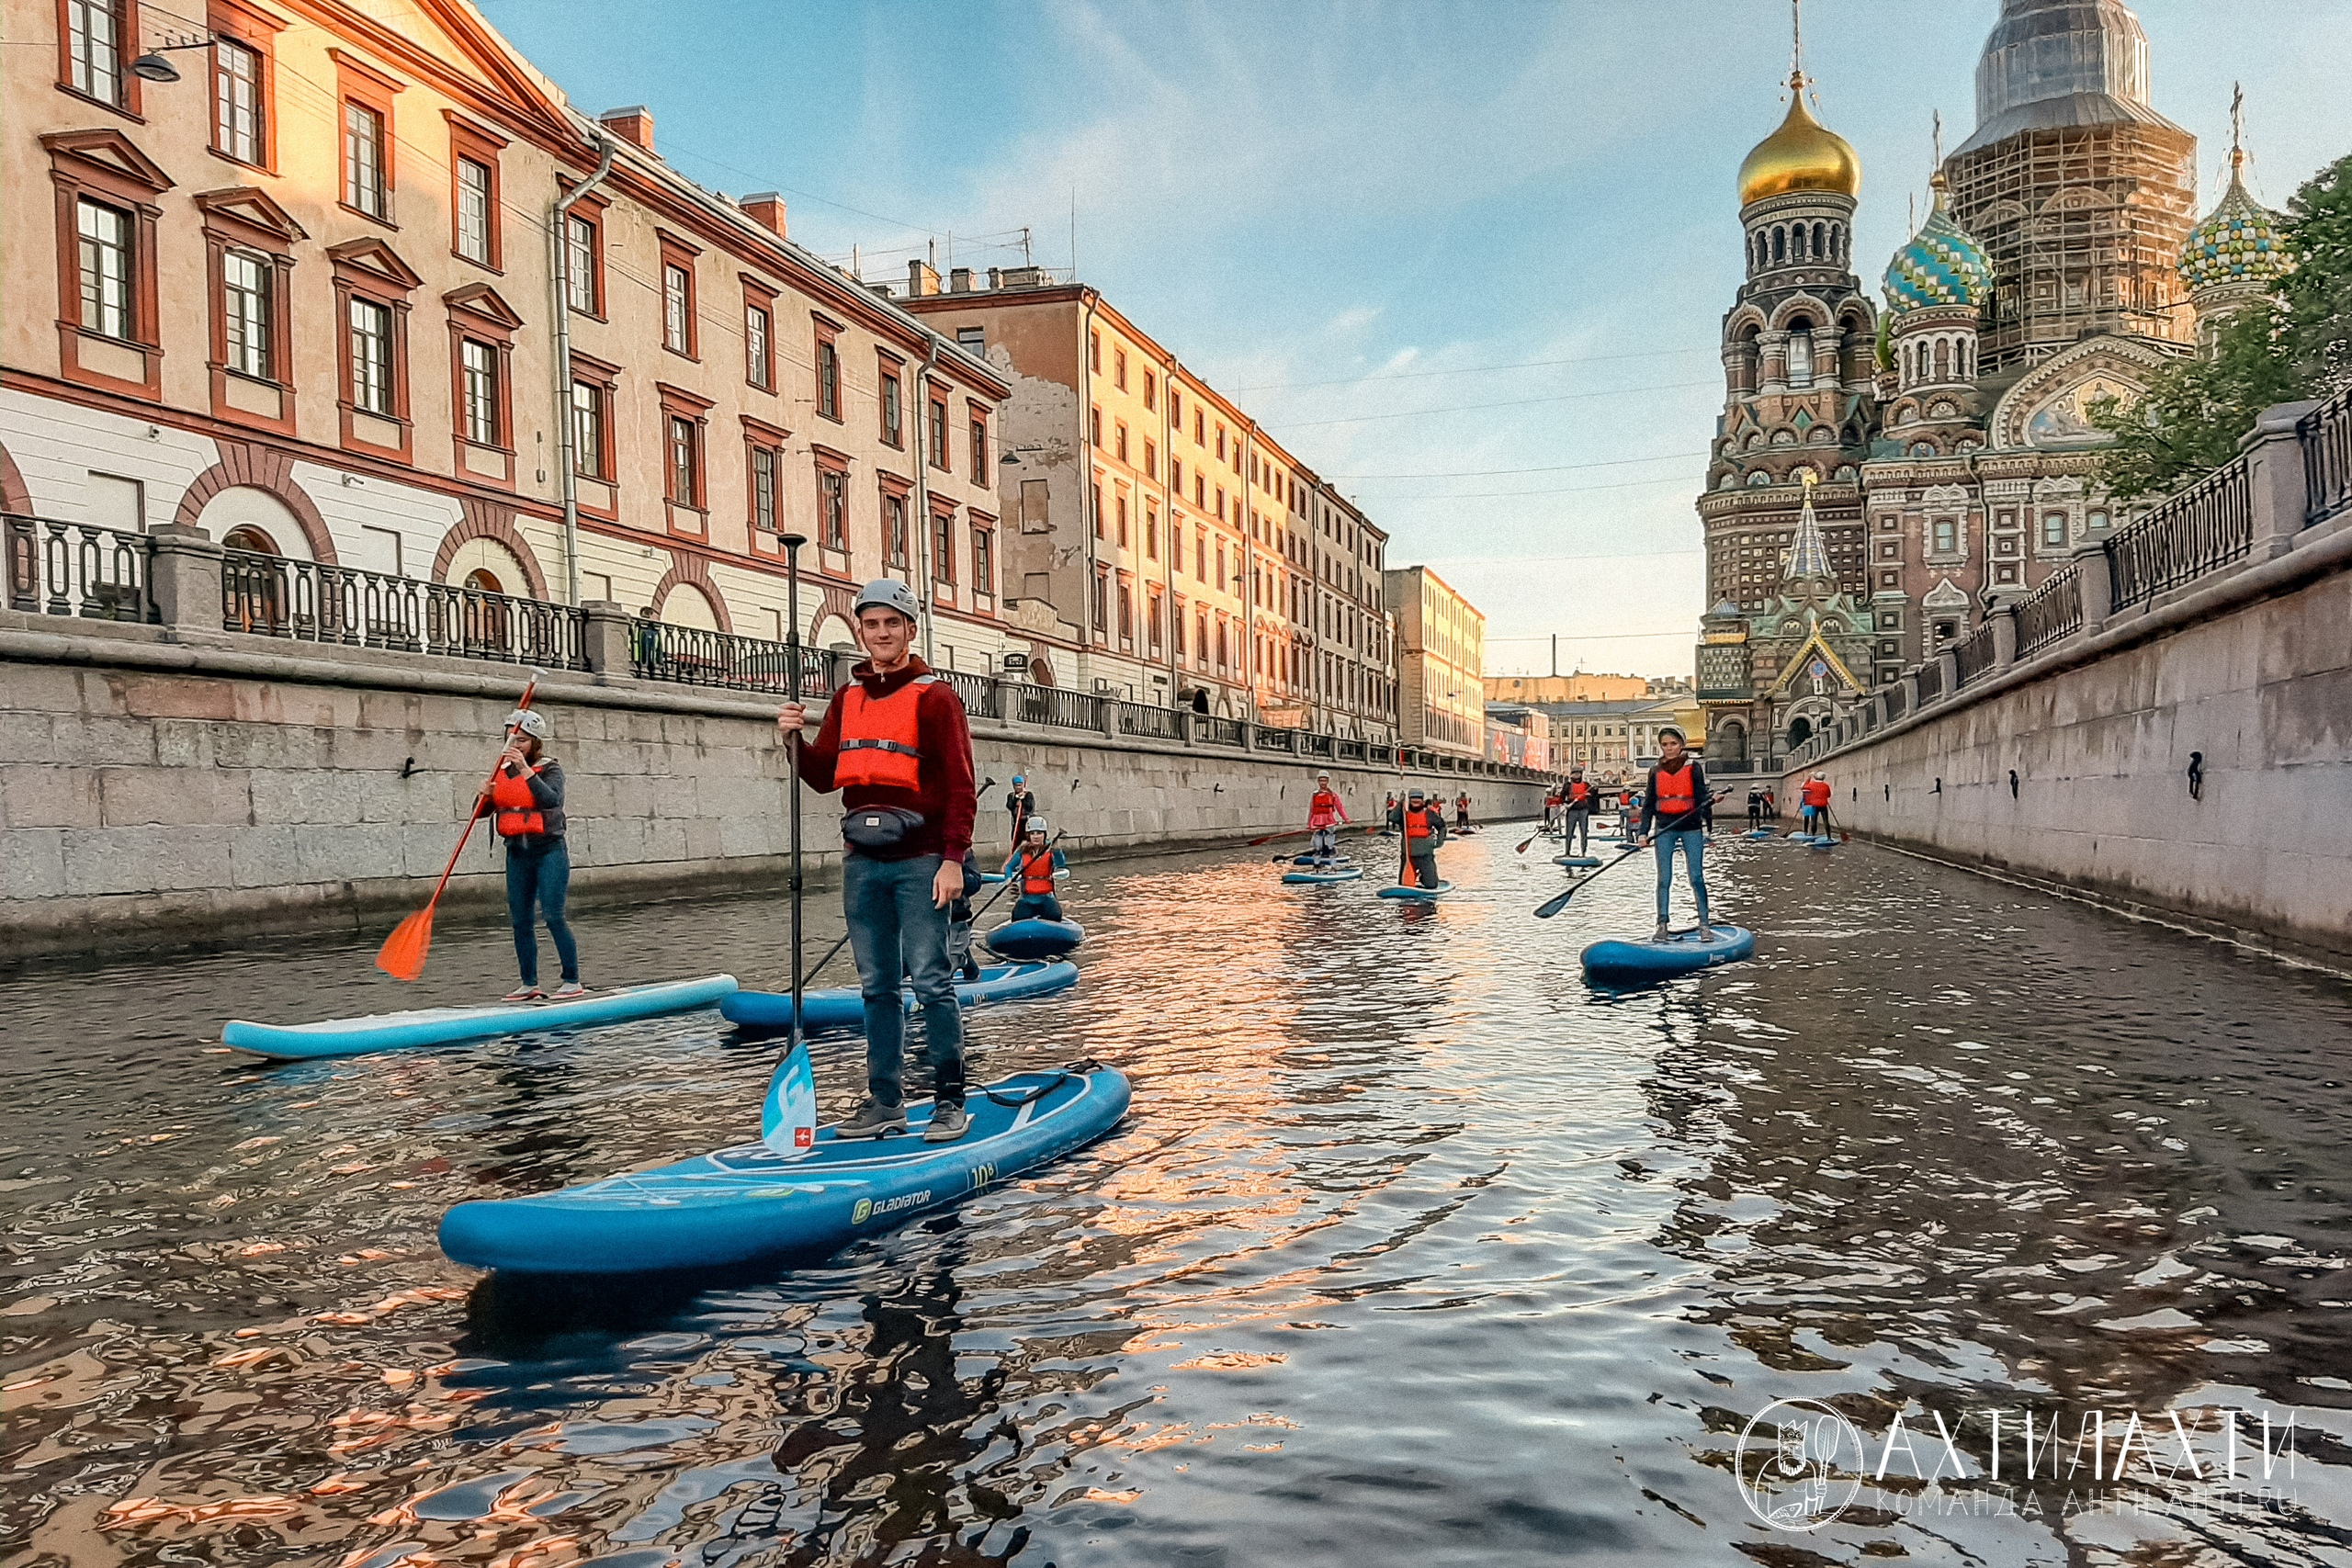 Куда сходить в апреле в санкт петербурге. САП борд СПБ прогулки. Sup прогулка Санкт-Петербург. САП серфинг по каналам в Санкт-Петербурге.